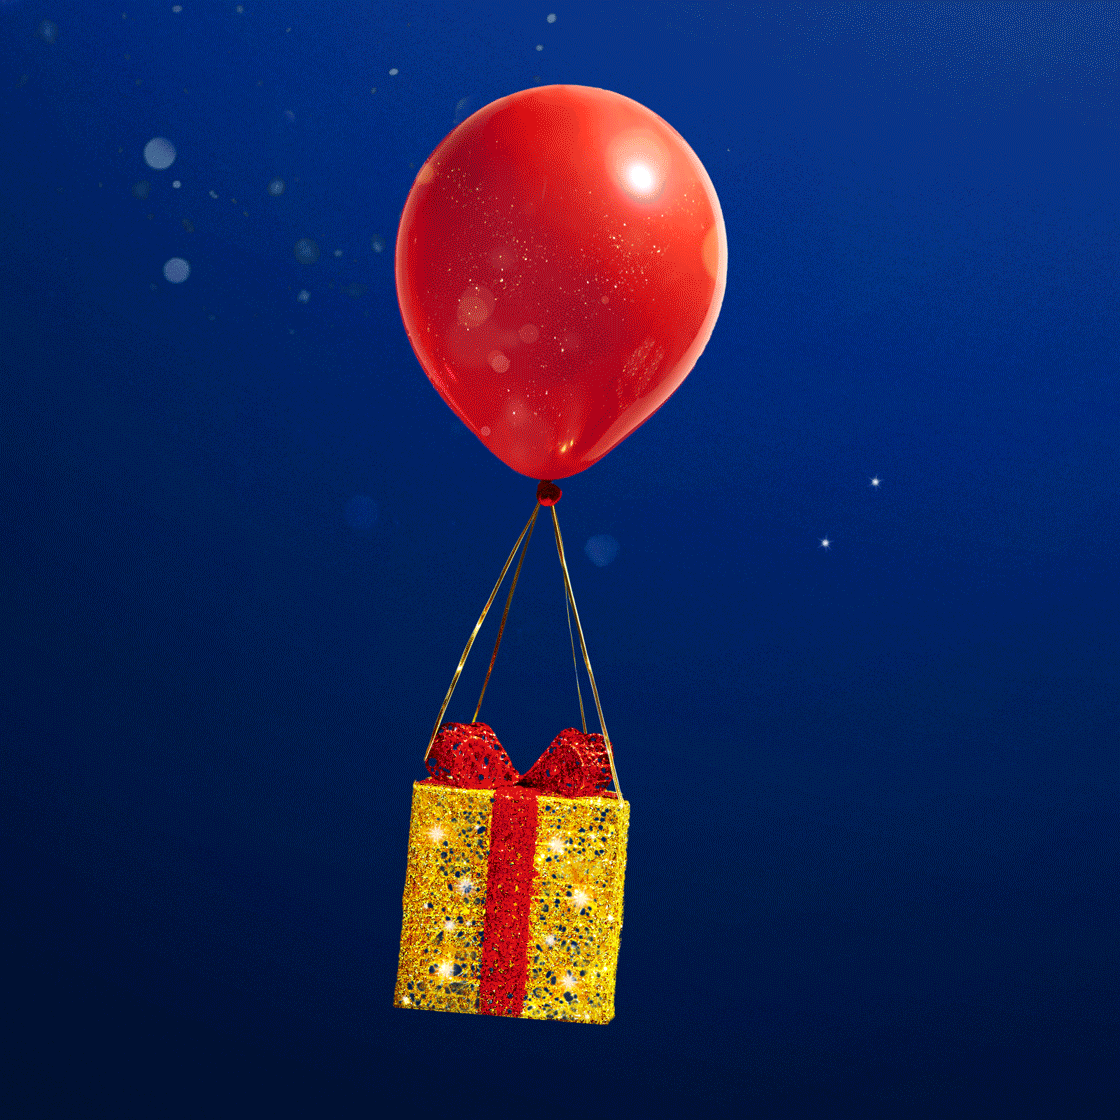 Floating Balloon holding lighted gift basket